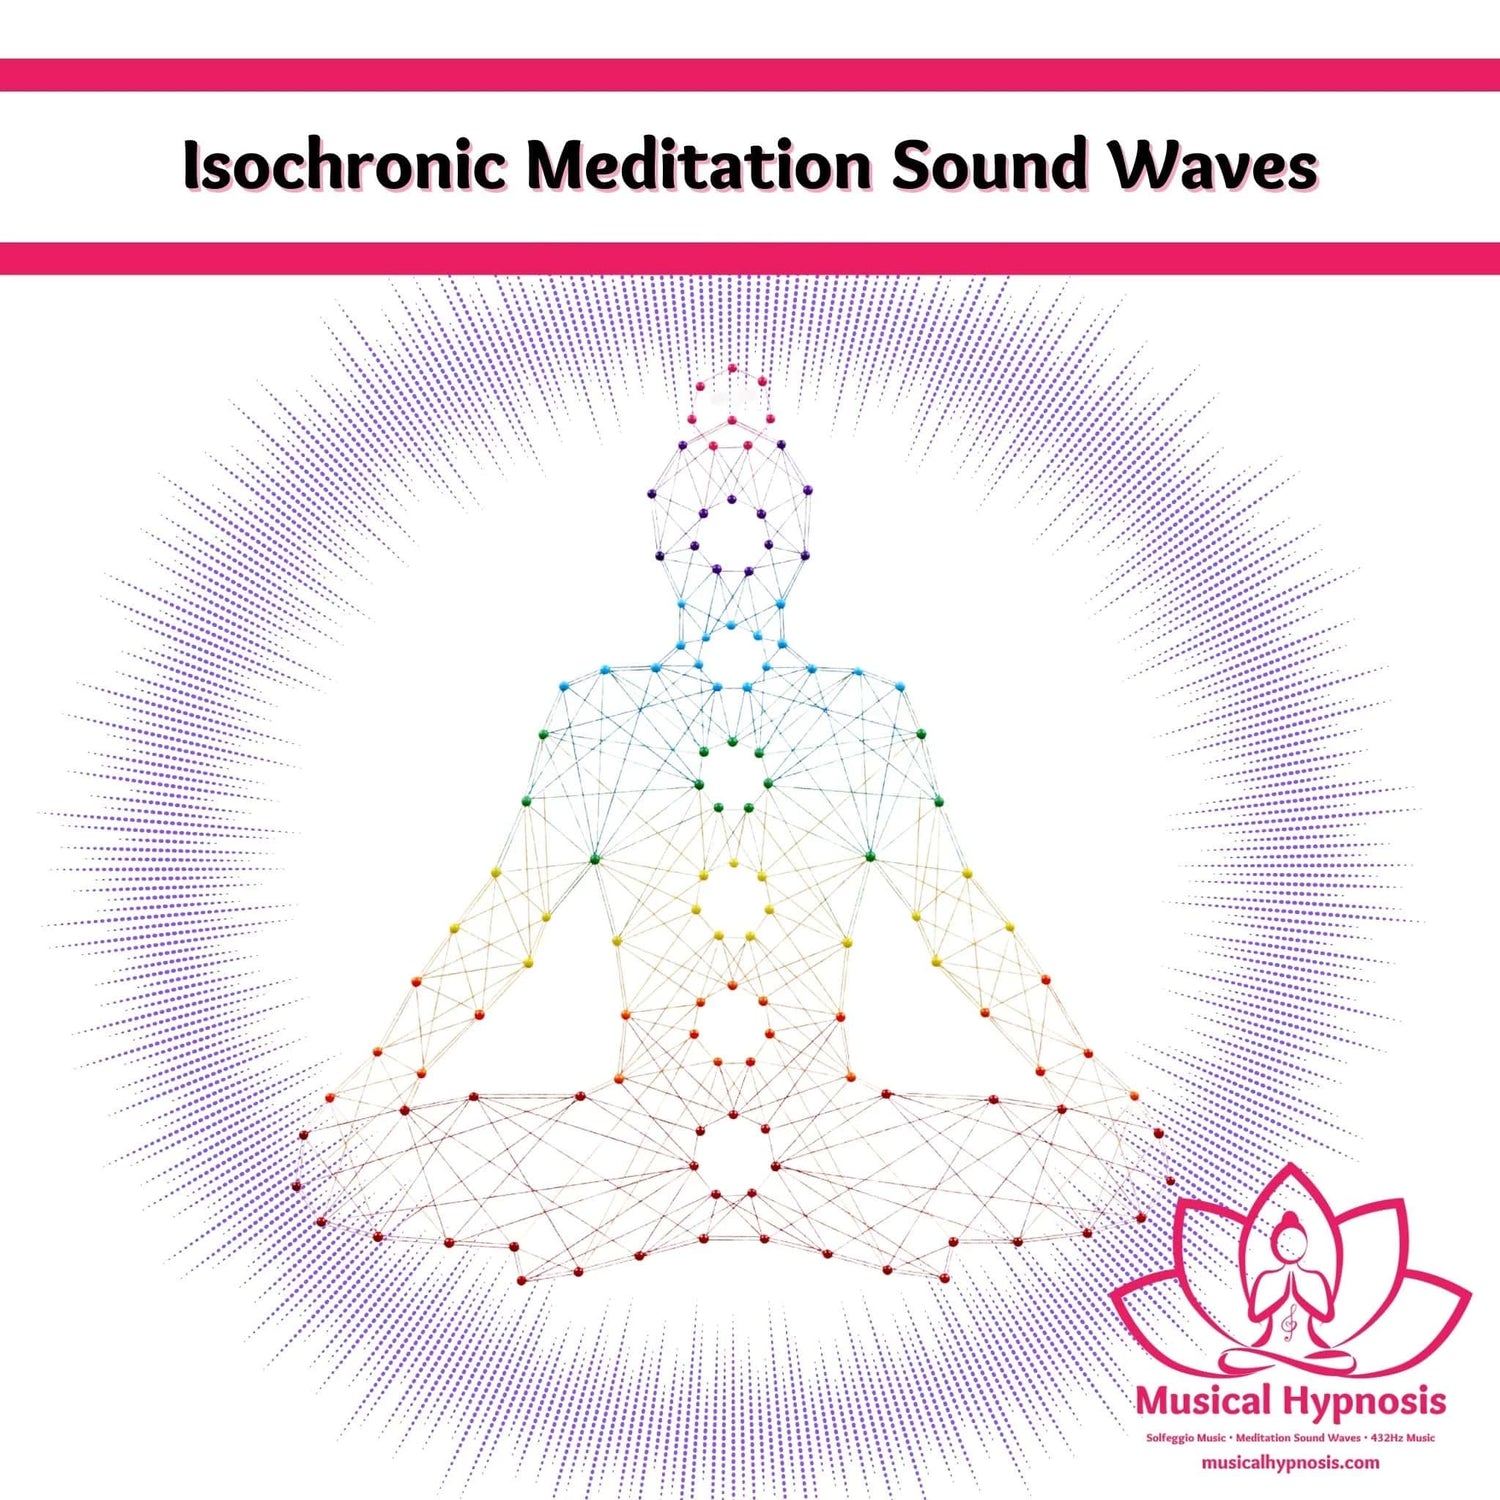 Isochronic Tones Meditation Sound Waves